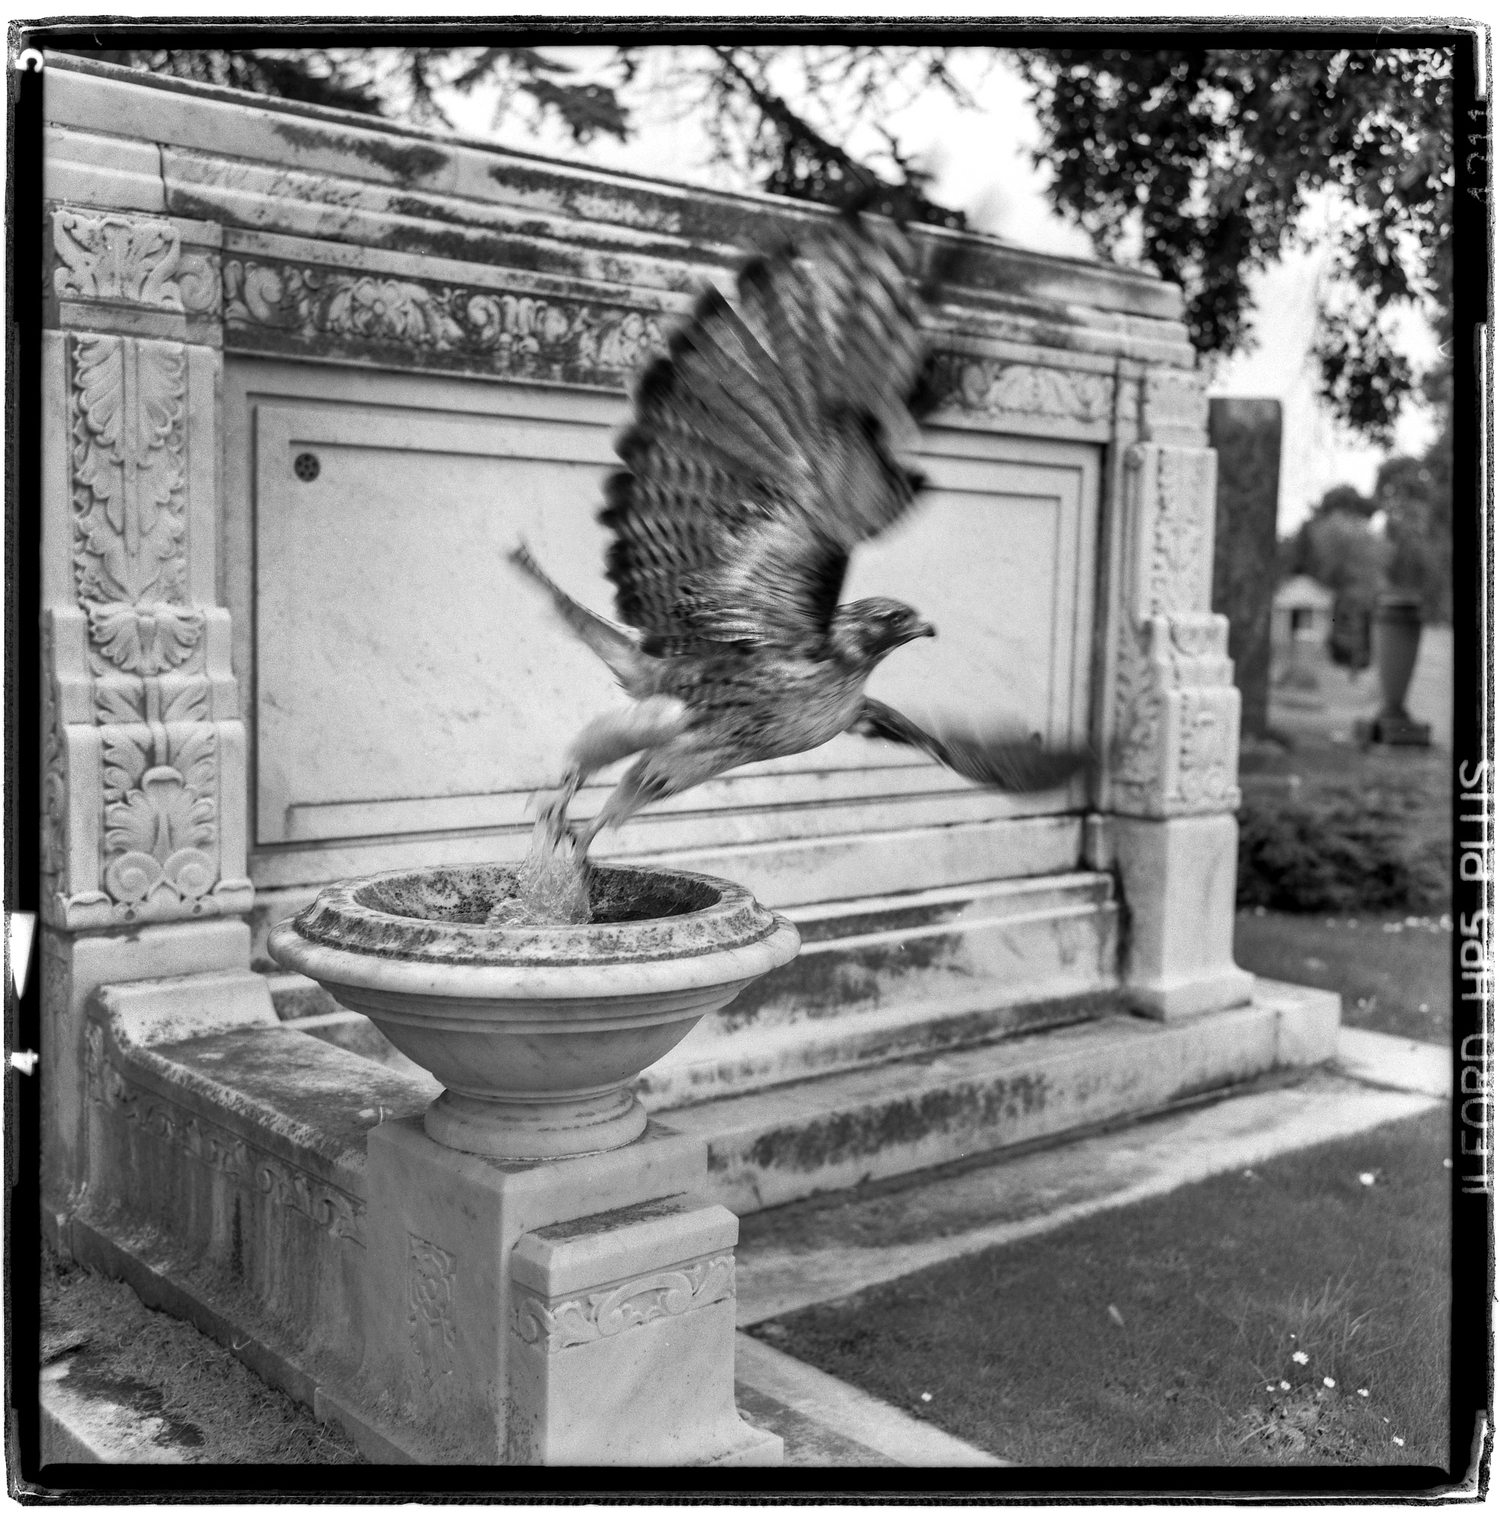   Eternal bird bath - Evergreen Cemetery Colma, CA  